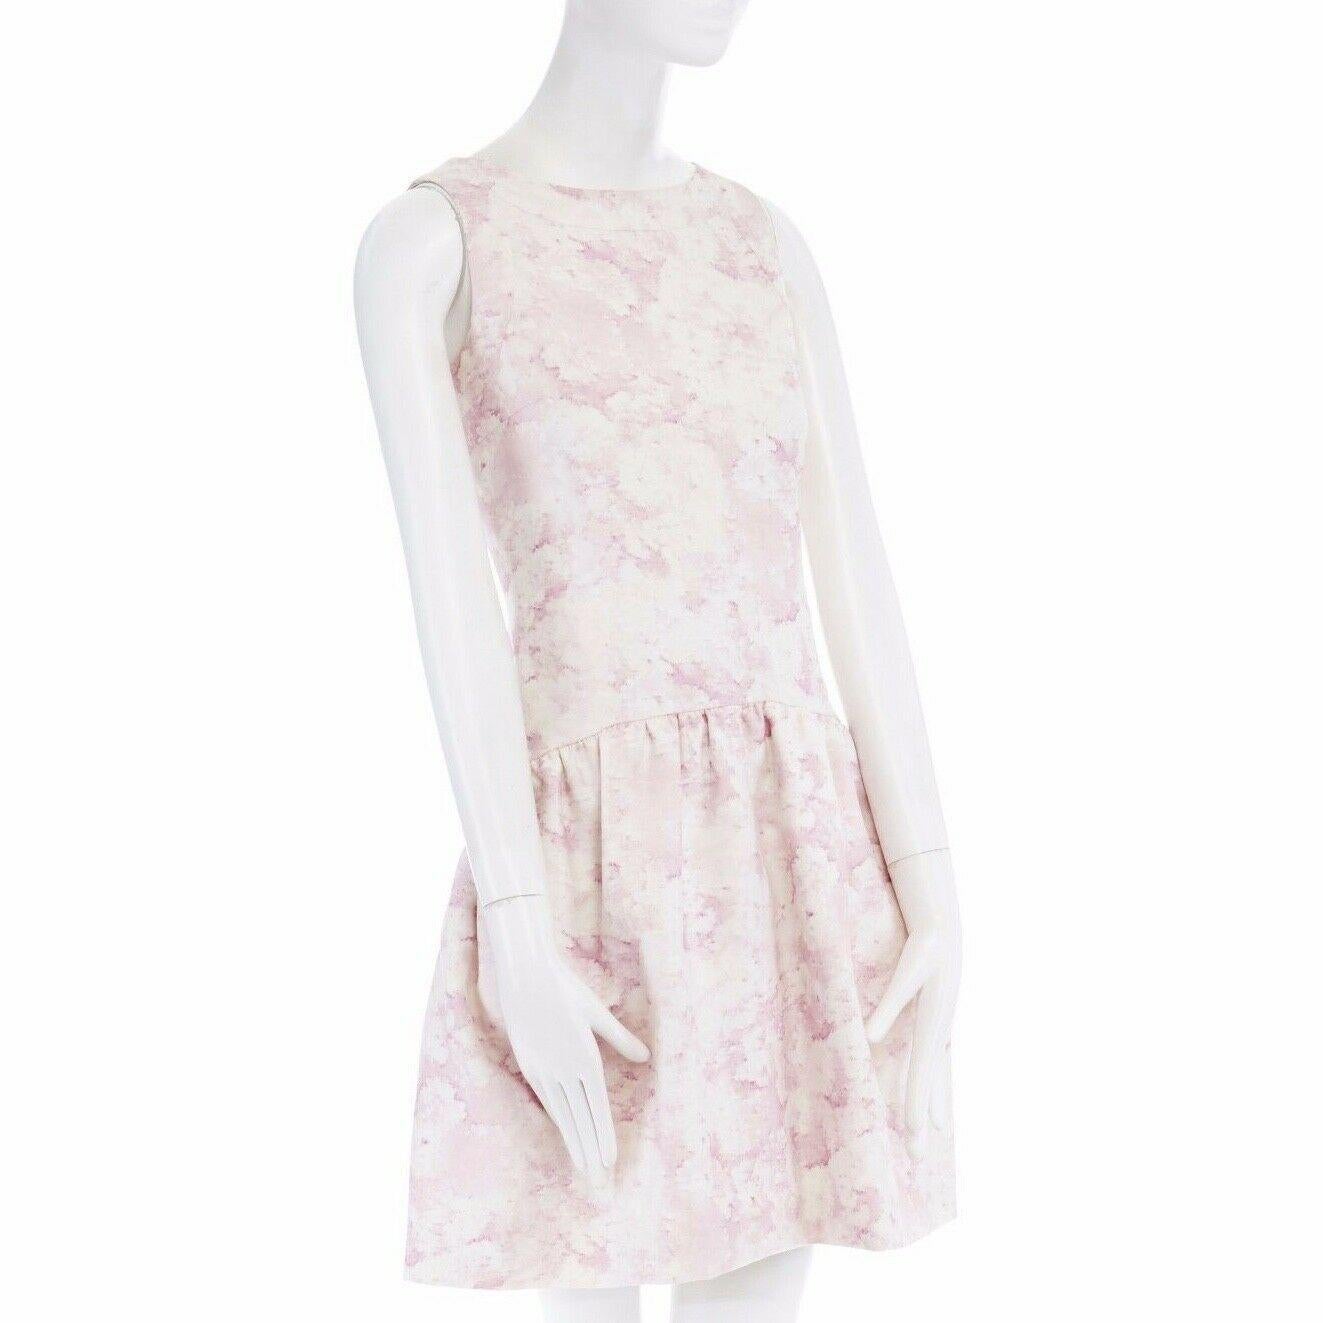 Women's GIAMBATTISTA VALLI white blush pink floral print silk bubble front dress IT40 S